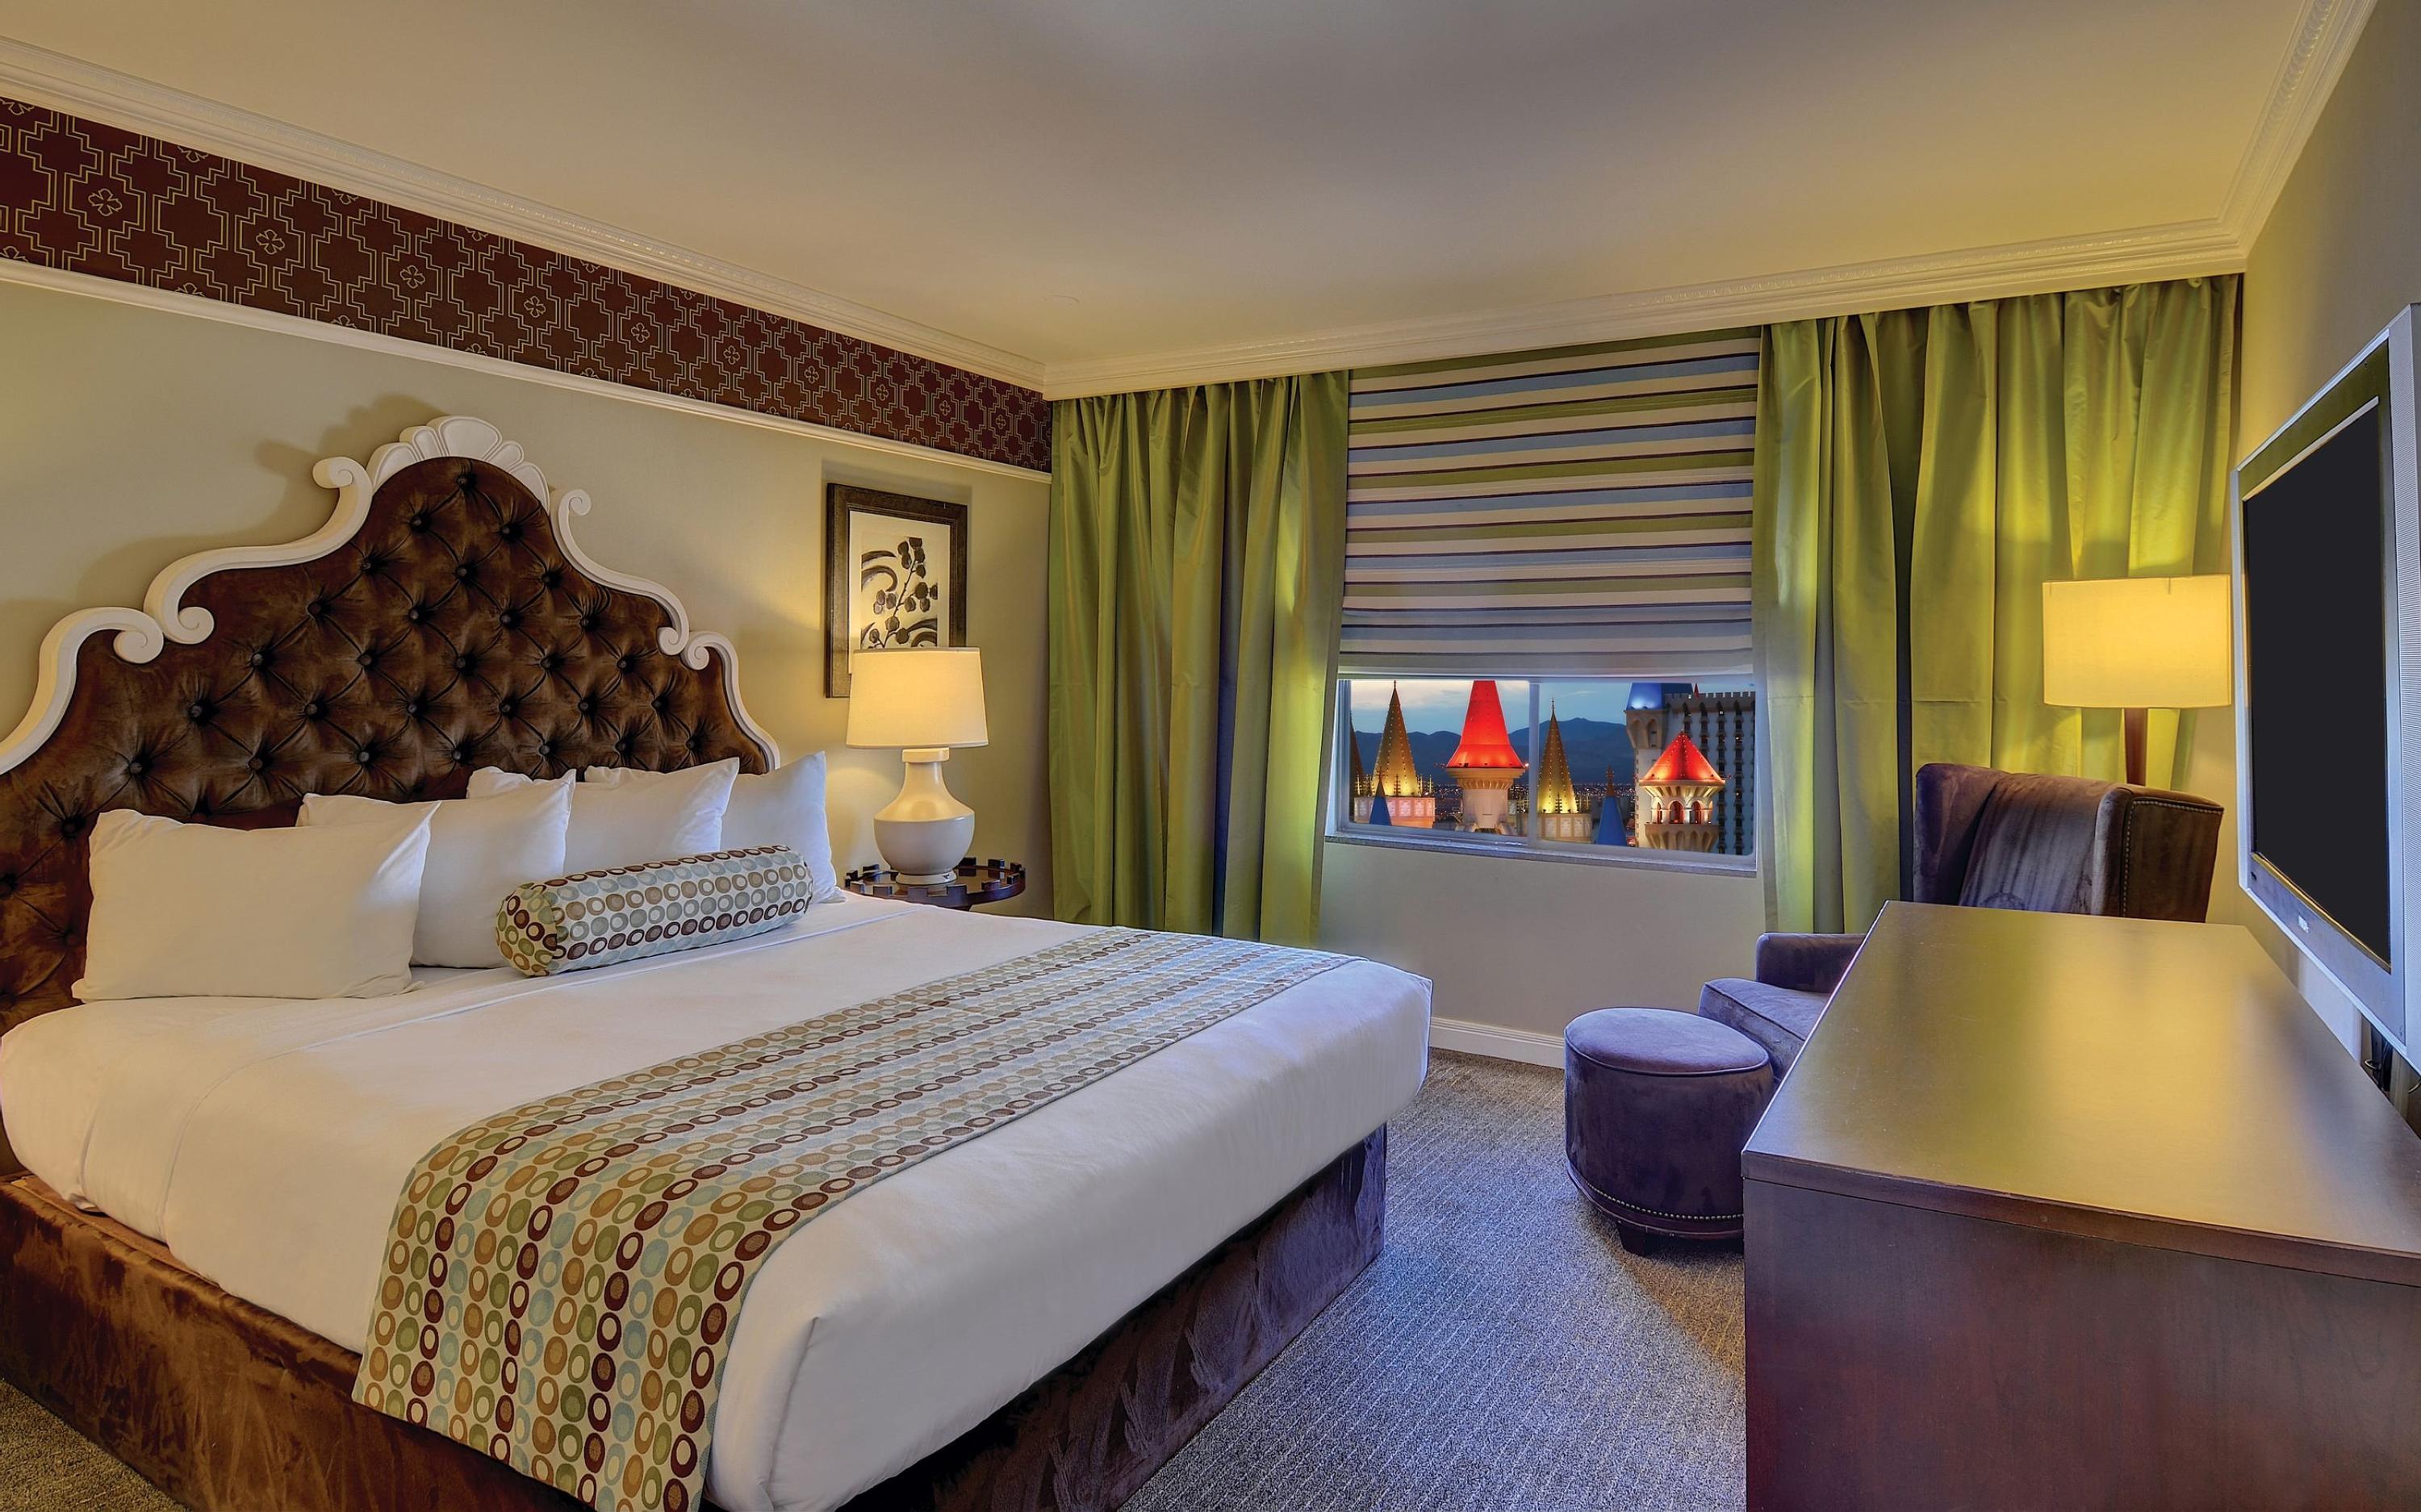 Hotels in The Strip (Las Vegas) from $29/night - KAYAK